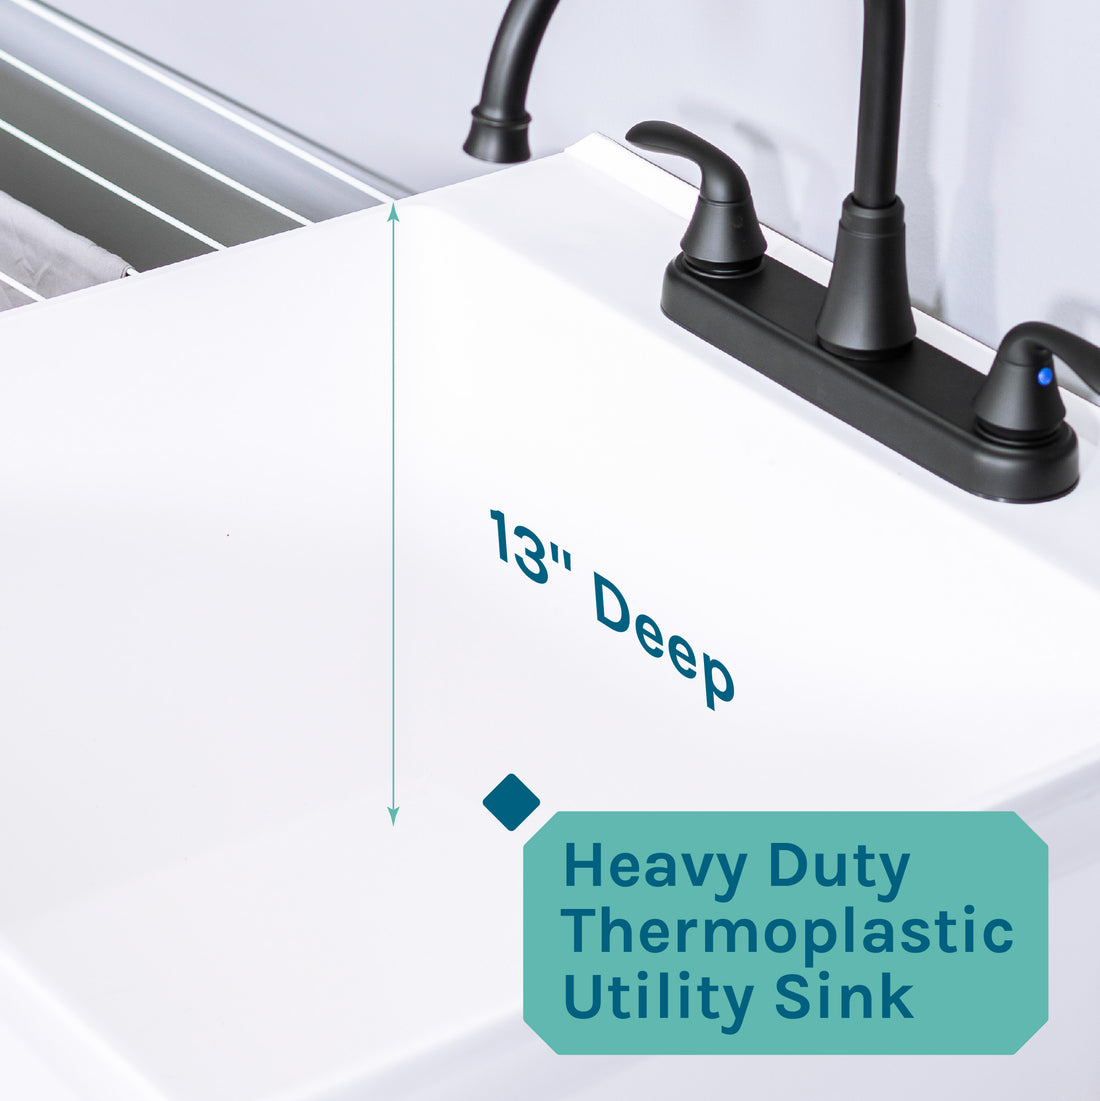 Tehila Standard Freestanding White Utility Sink with Black Legs and Black Finish Wide-set Gooseneck Faucet with Side Sprayer - Utility sinks vanites Tehila